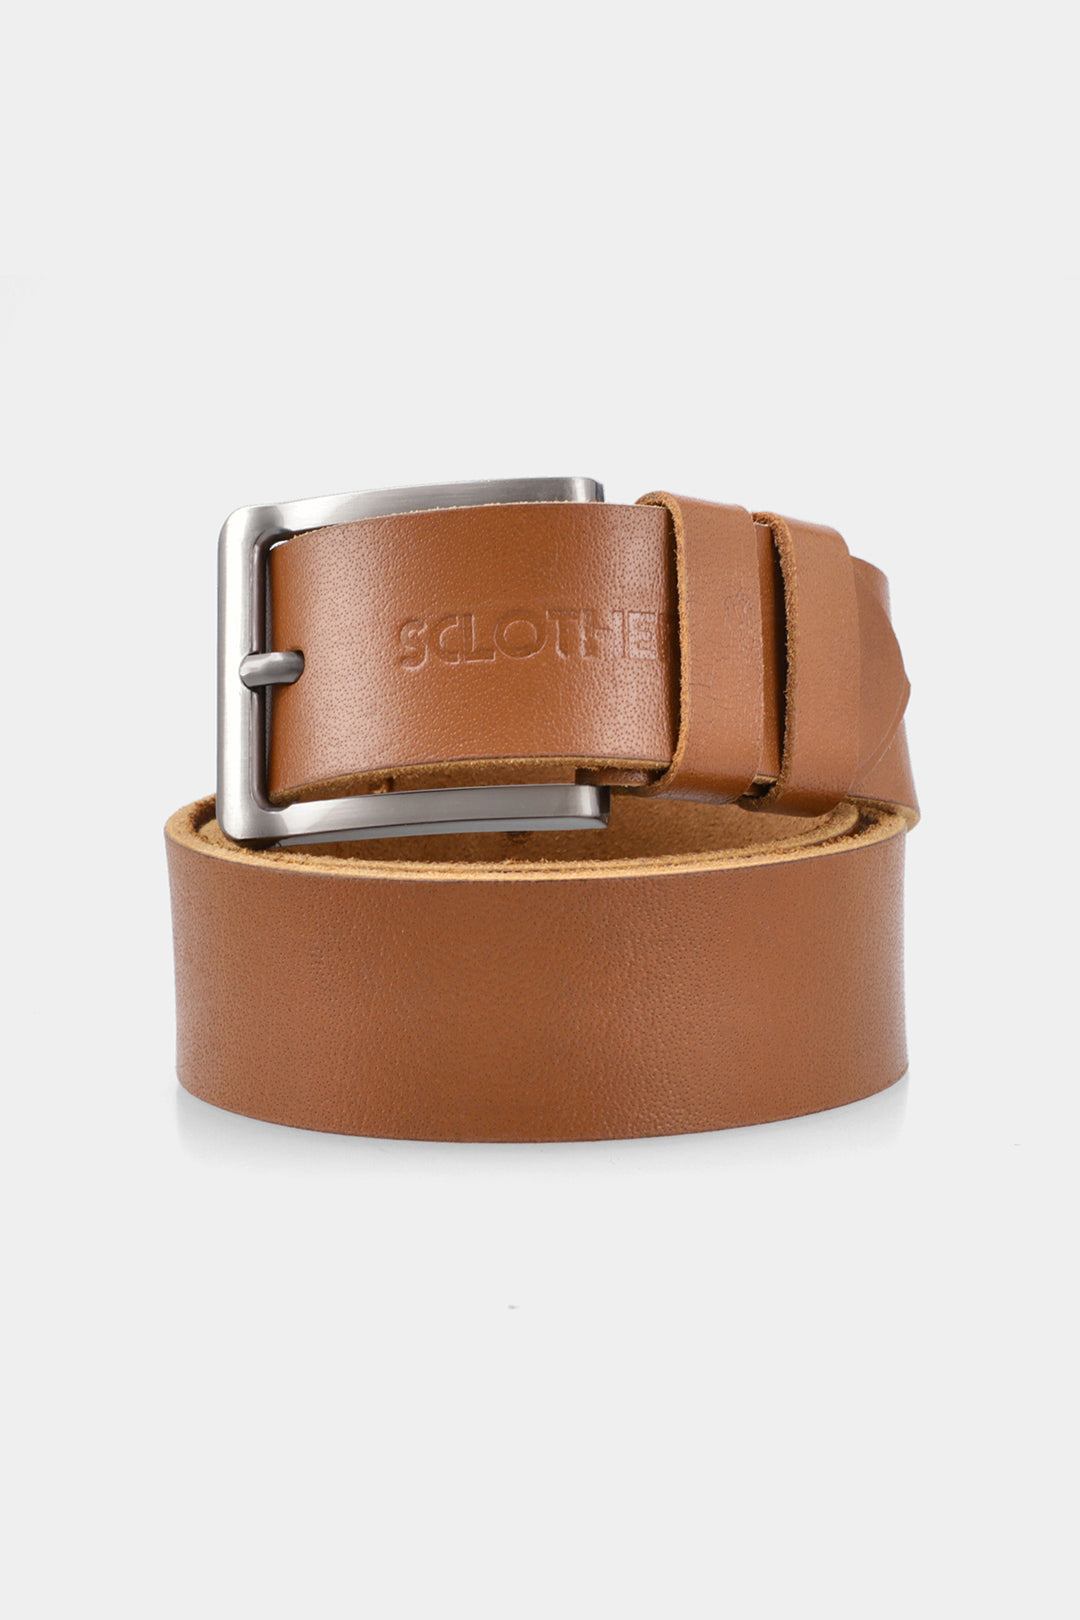 Basic Brown Leather Belt - S22 - MB0010R